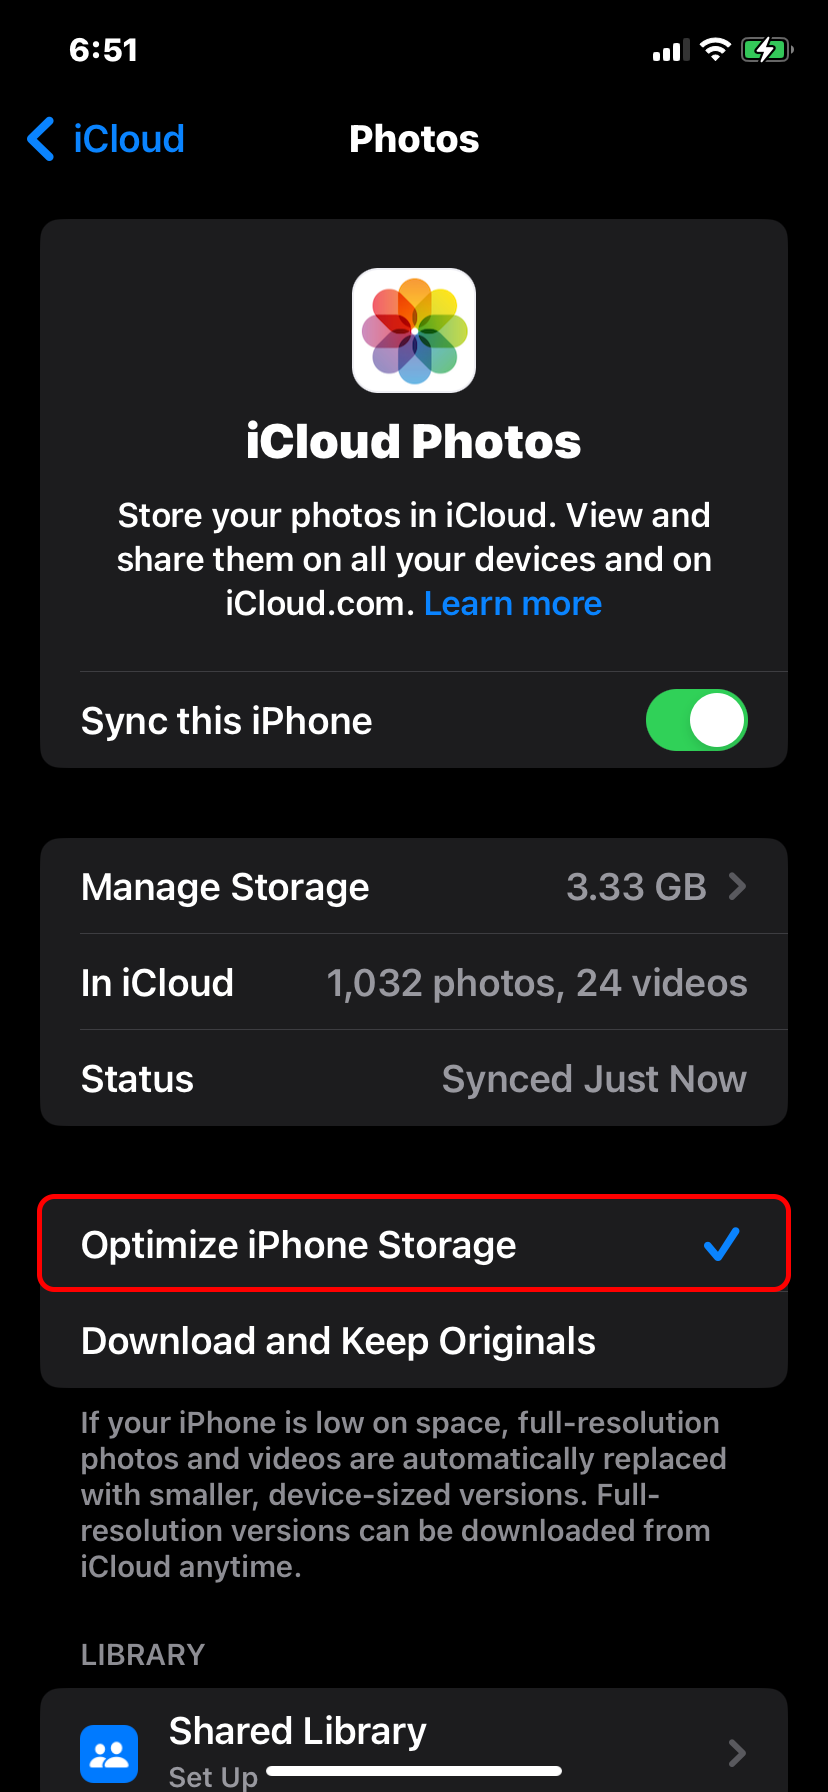 Optimize iphone storage in Icloud